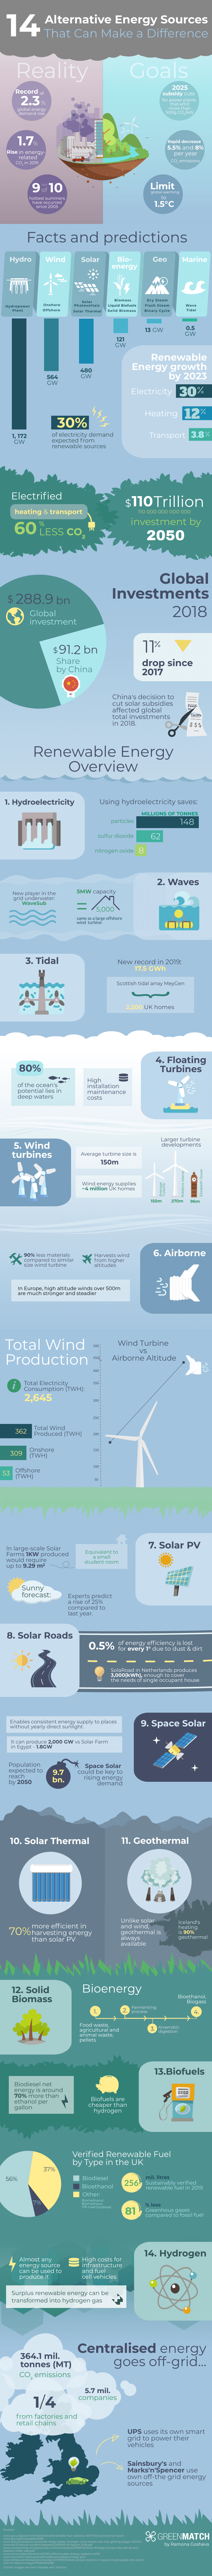 Infographic Alternative Energy Sources